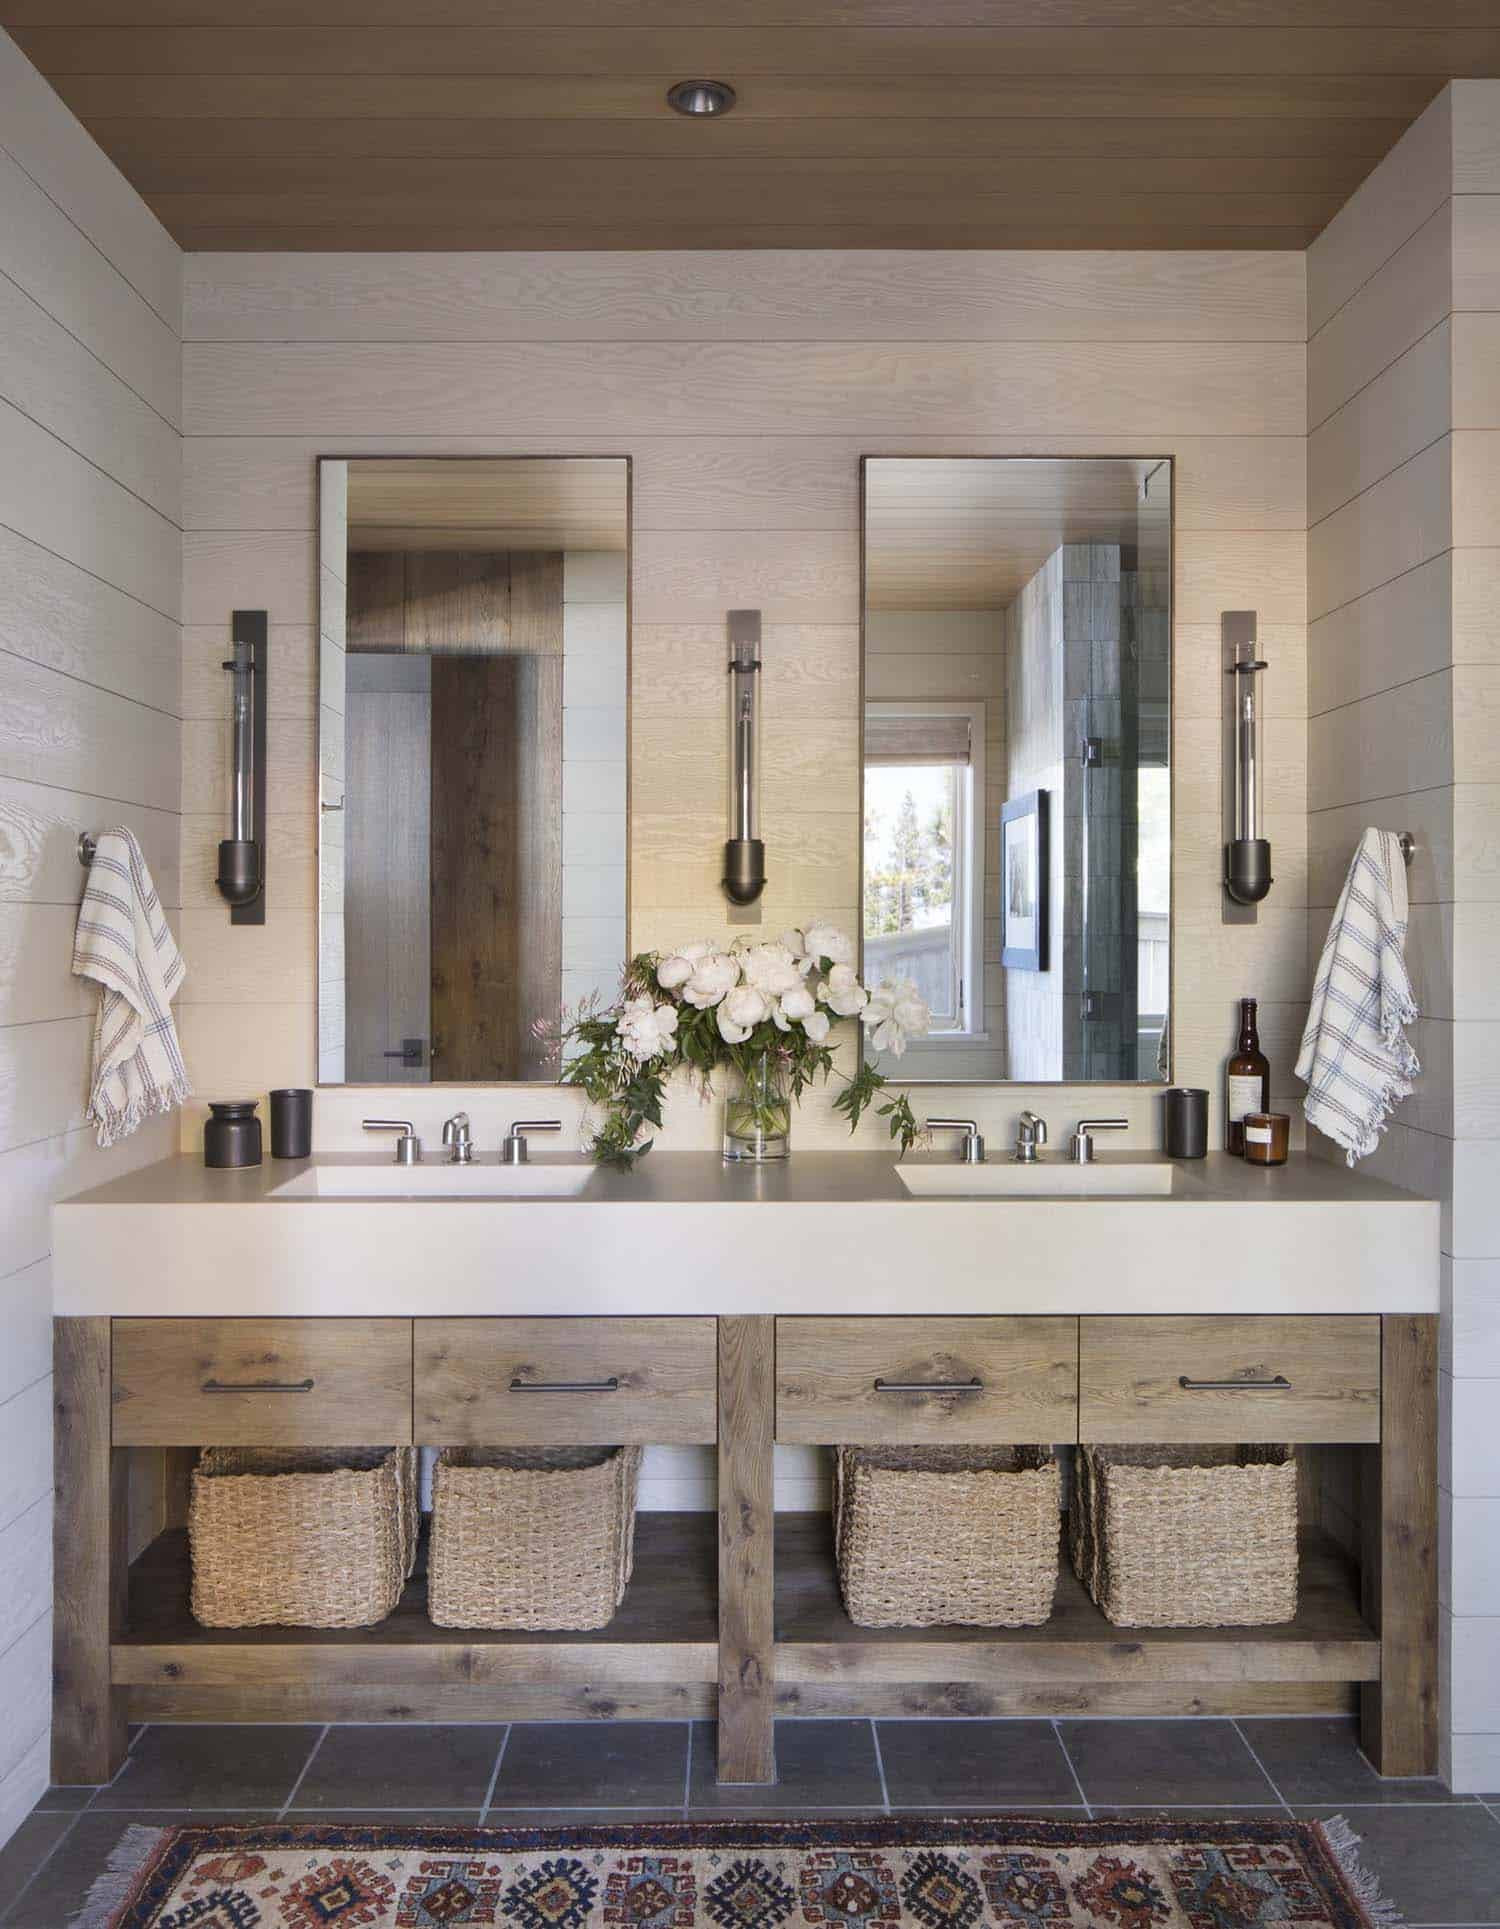 Lake Bathroom Decor
 Rustic lake house retreat inspired by gorgeous Lake Tahoe